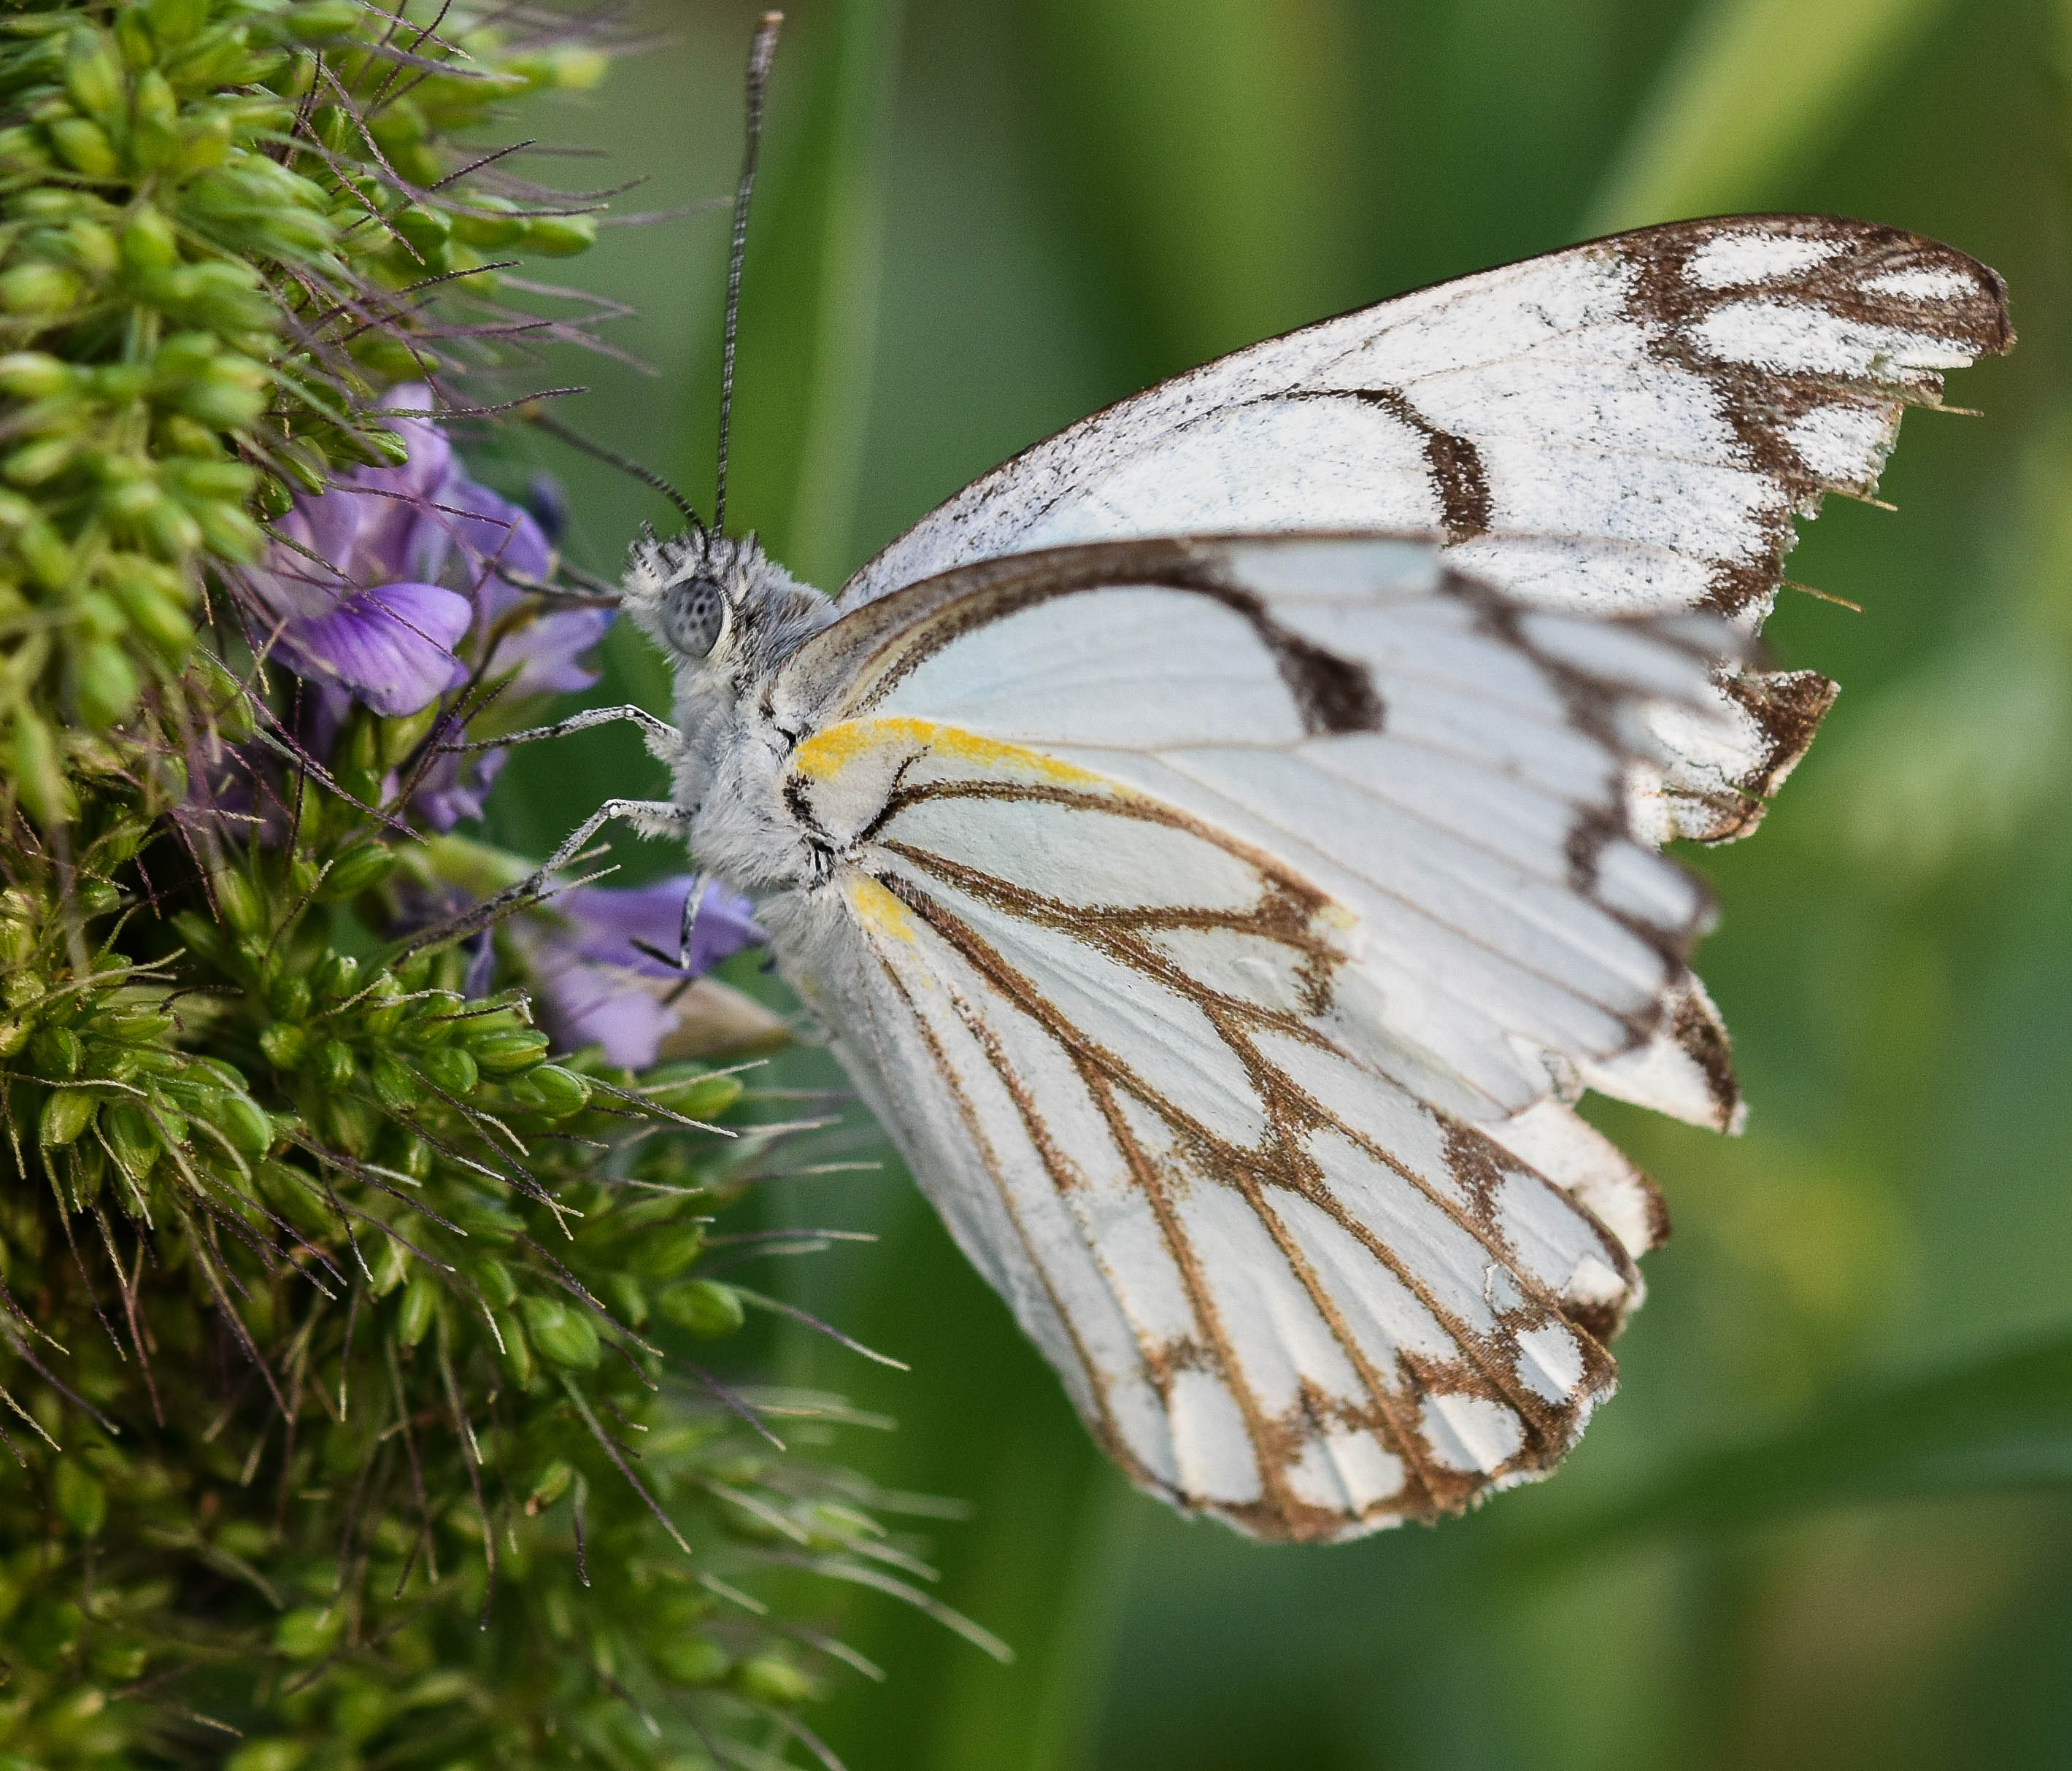 File:Brown-veined white butterfly (Belenois aurota).jpg - Wikimedia ...